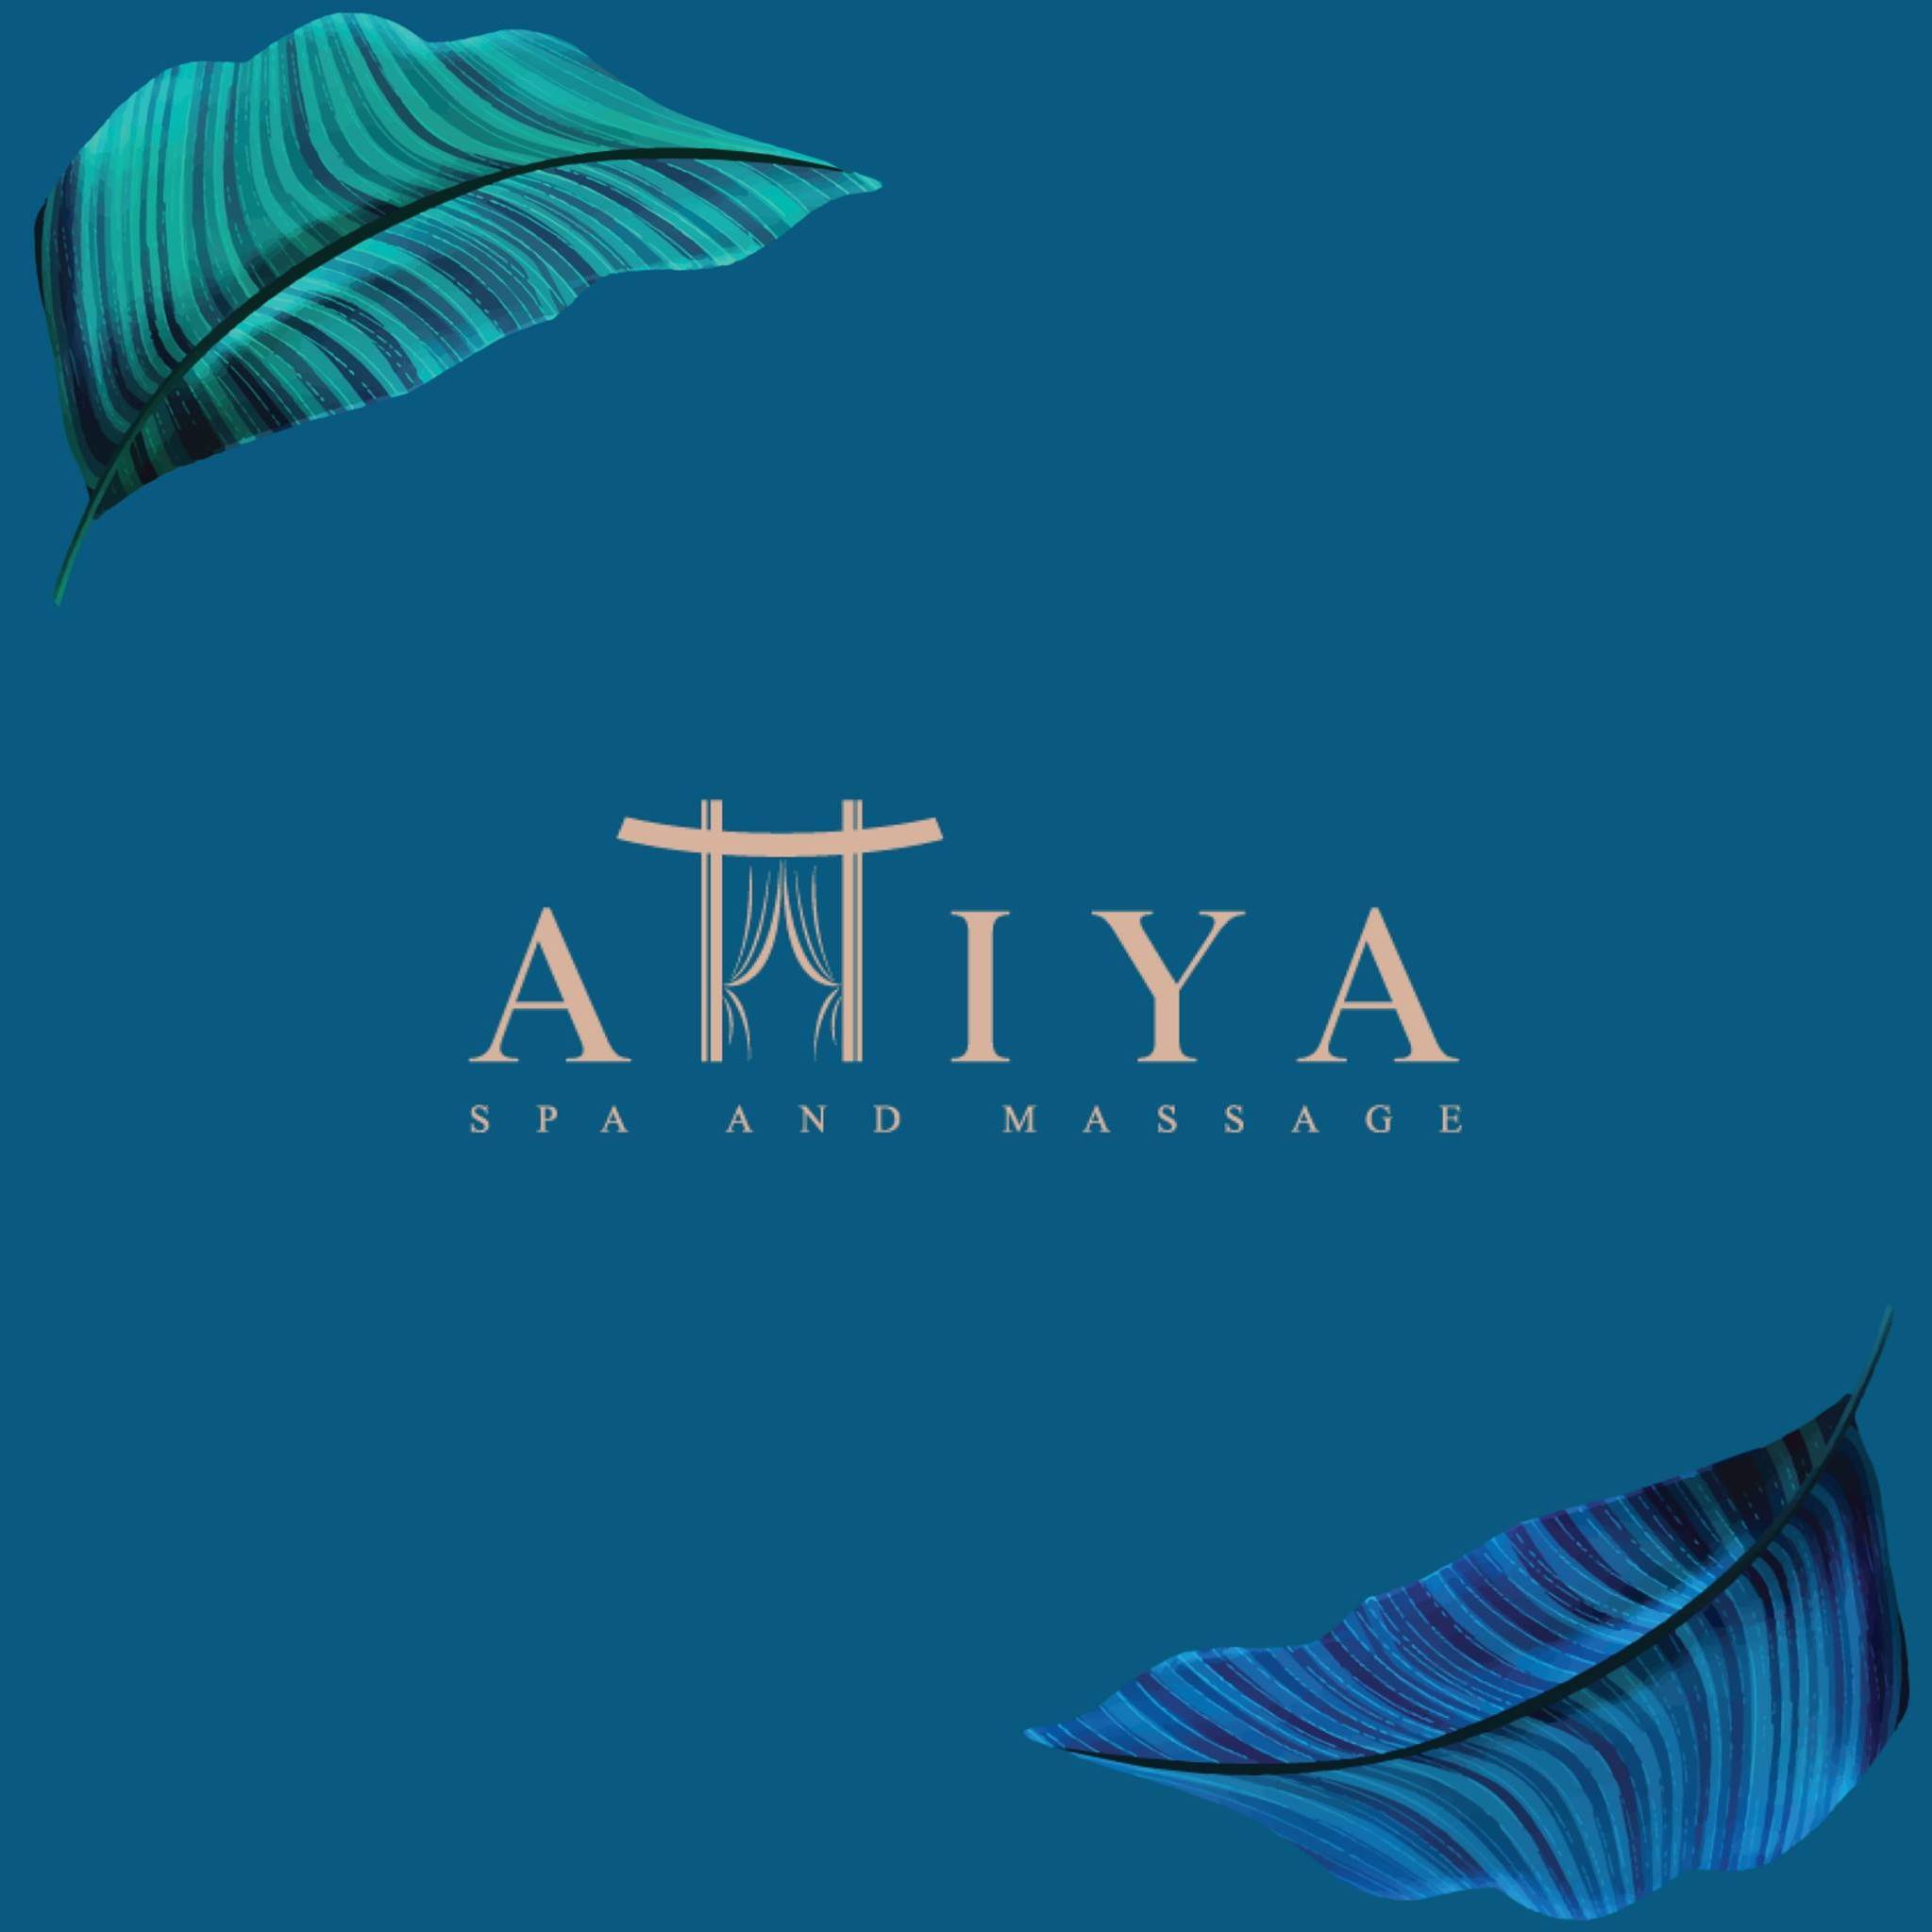 Attiya Spa